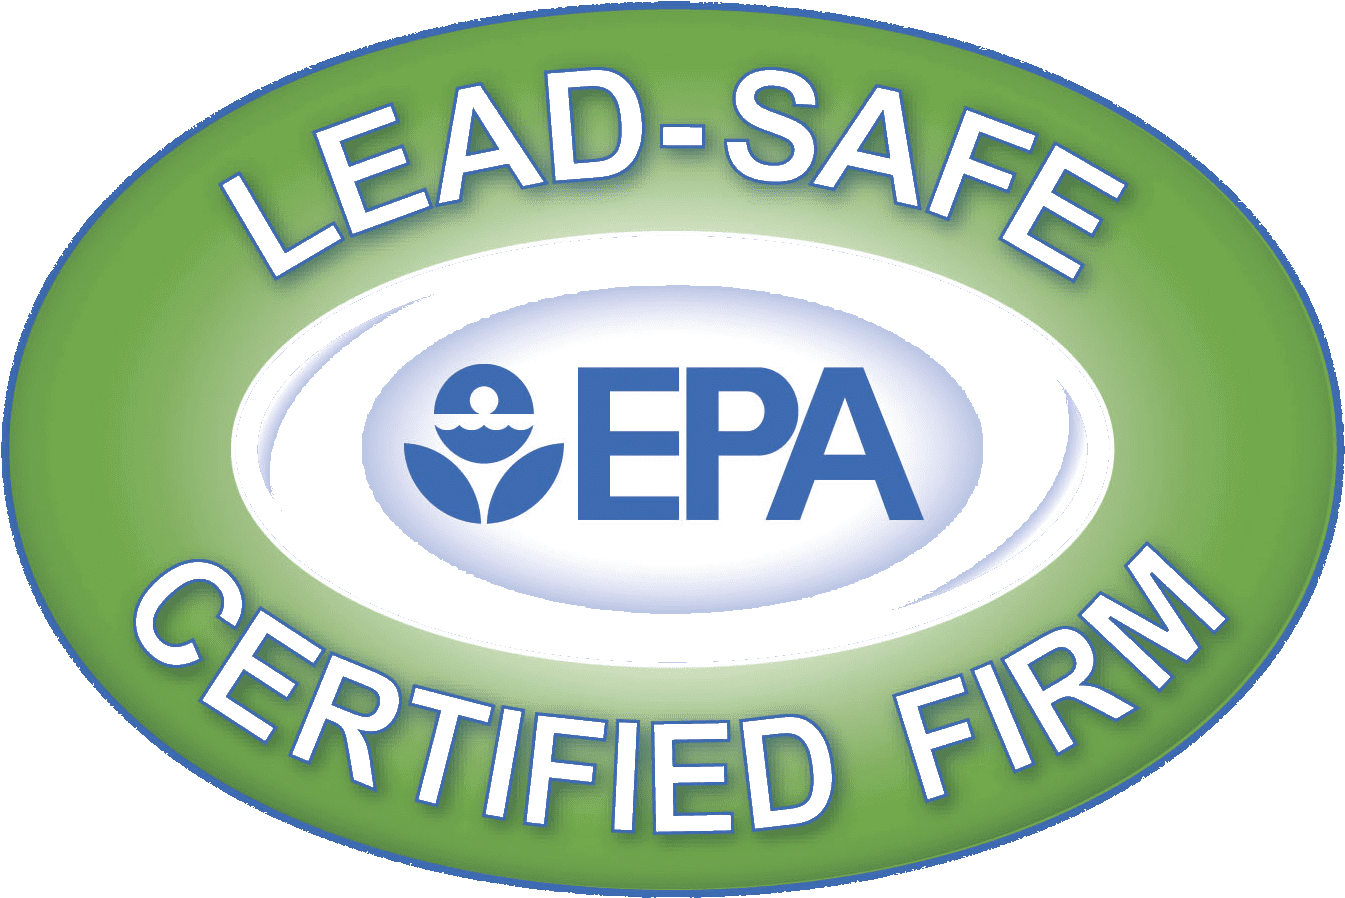 lead safe epa